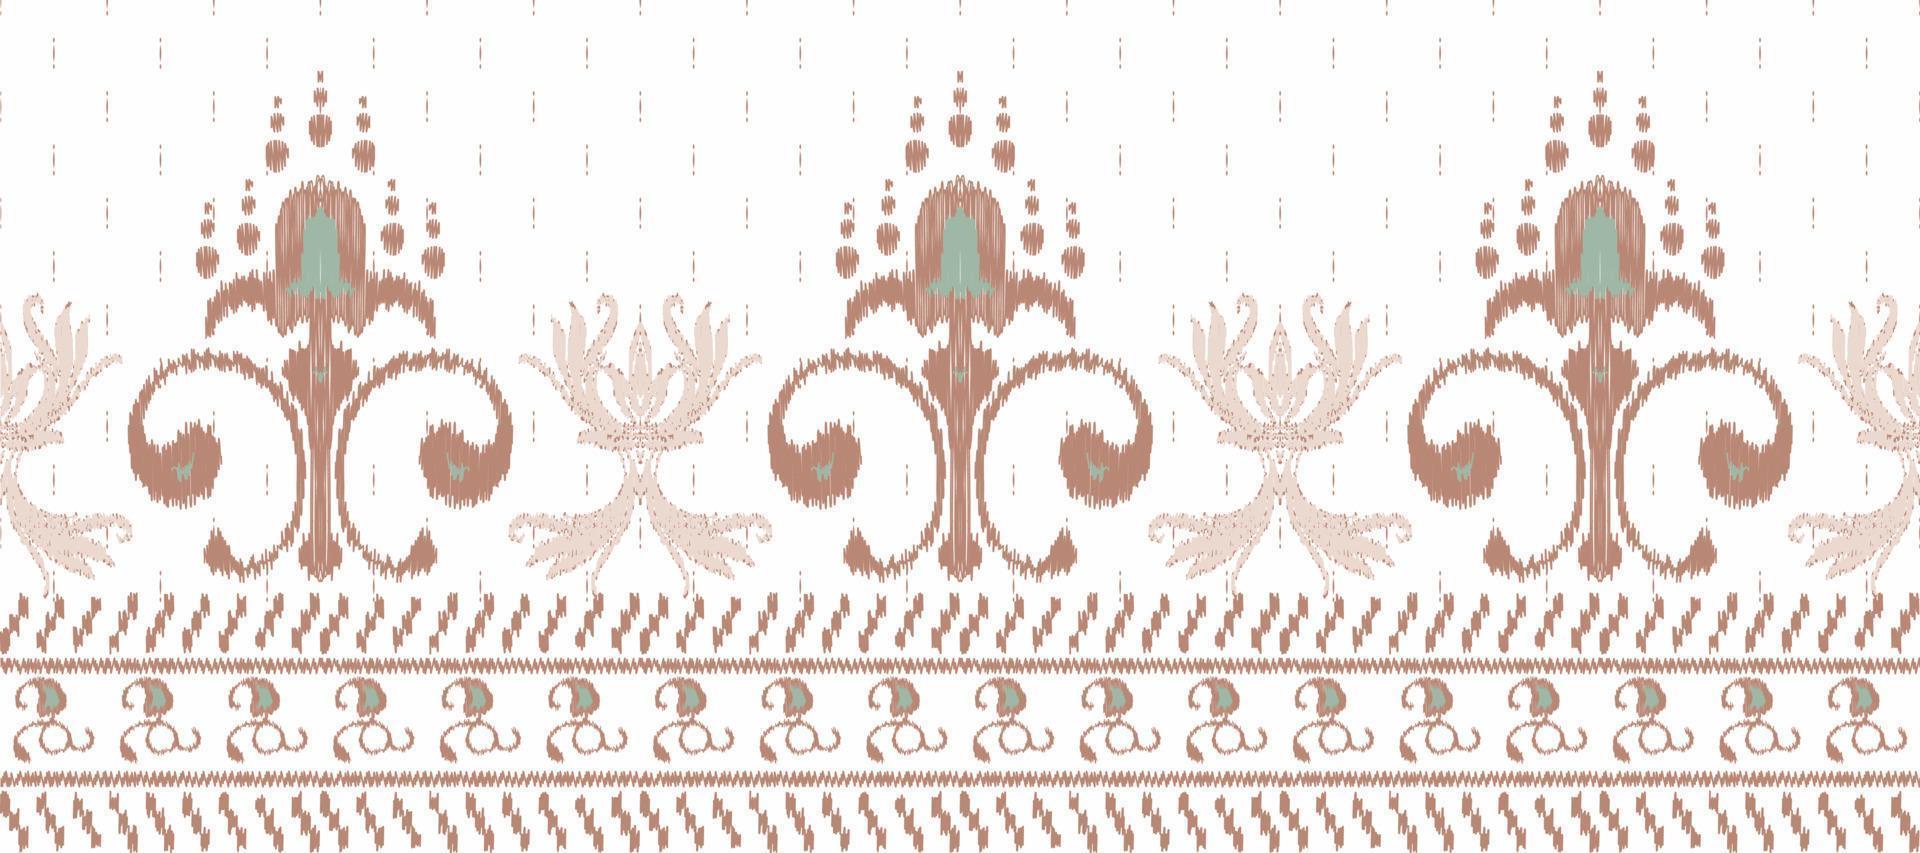 africano ikat tecido paisley bordado fundo. geométrico étnico oriental padronizar tradicional. ikat asteca estilo abstrato vetor ilustração. Projeto para impressão textura, tecido, saree, sari, tapete.